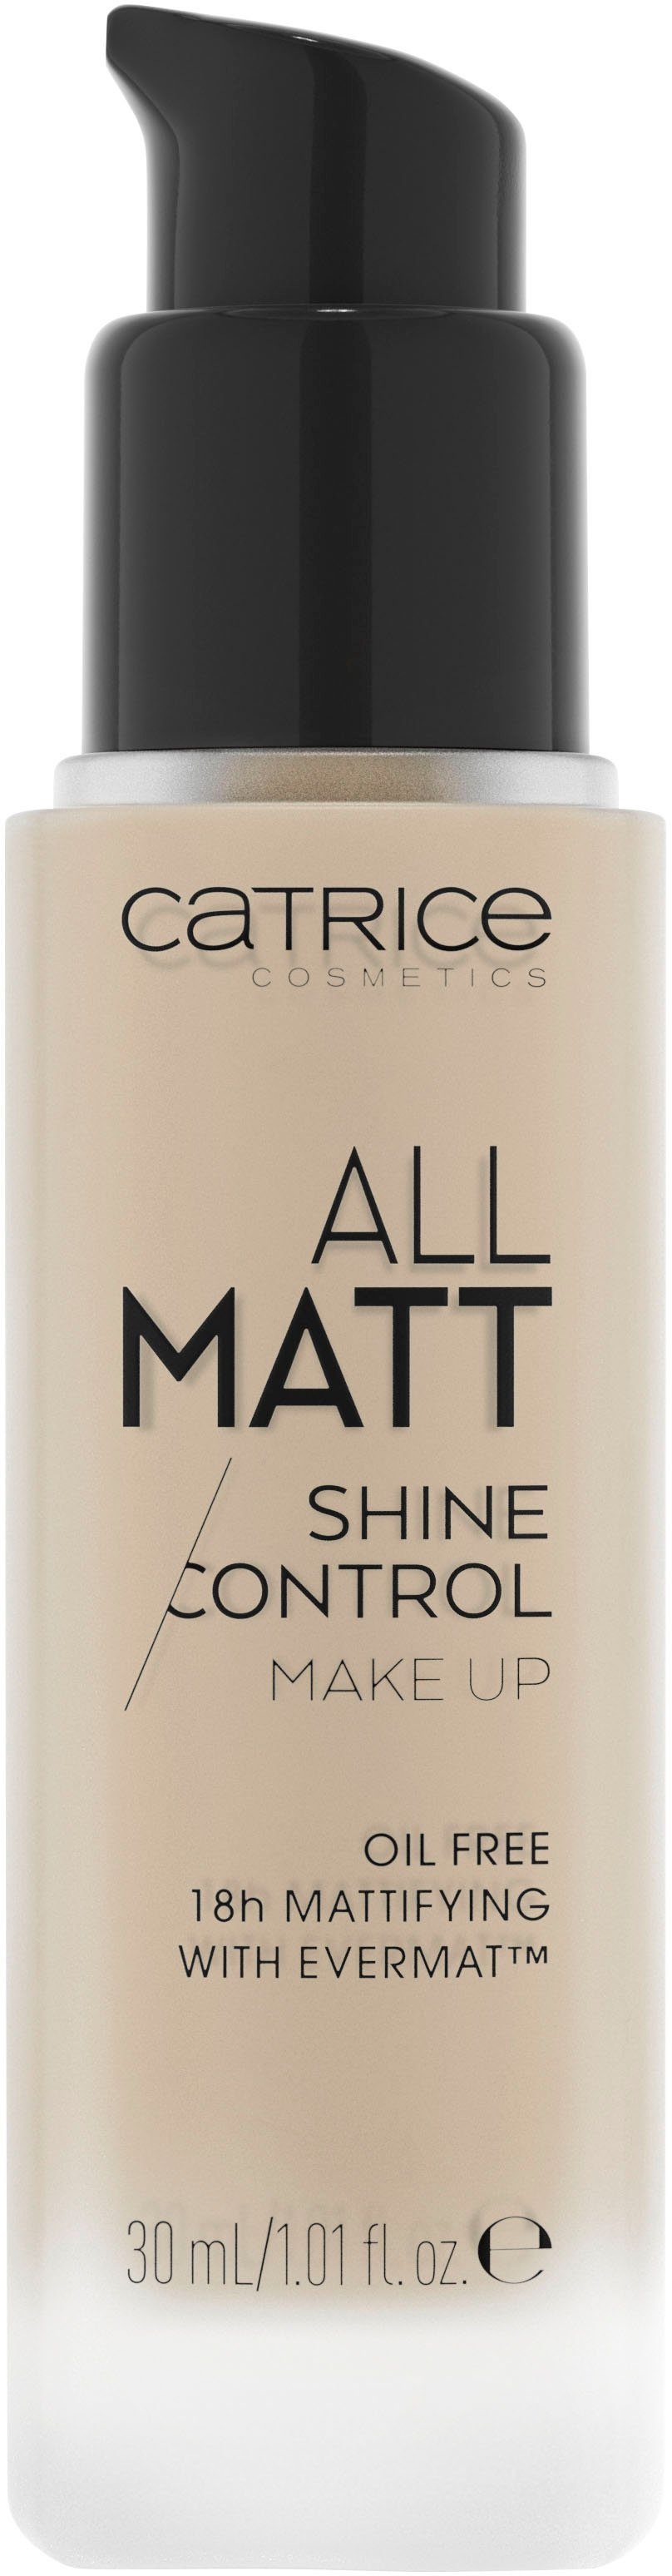 Make Light Matt Catrice Neutral Up Beige All Shine Foundation Control